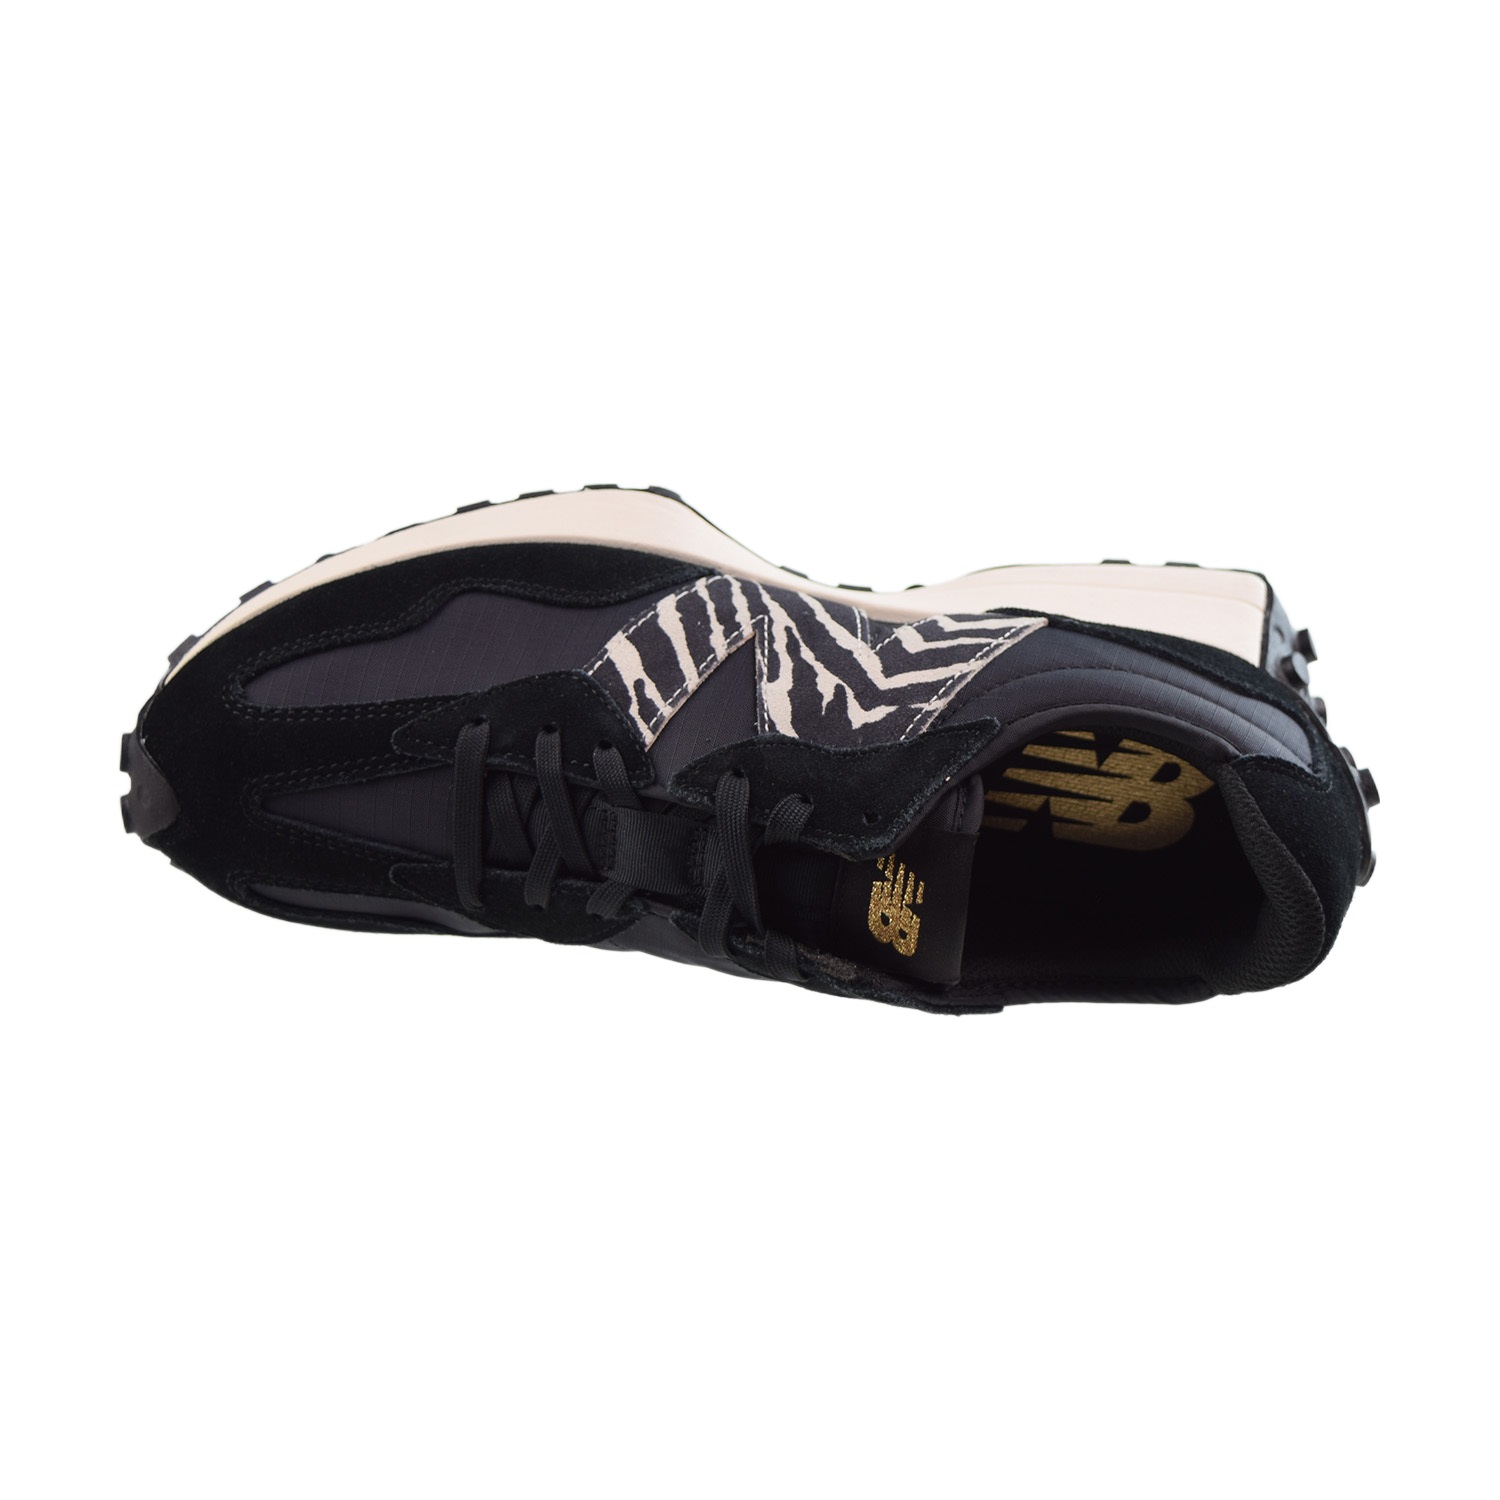 New Balance 327 ASOS Exclusive Zebra Print Men's Shoes Black MS327-ANM